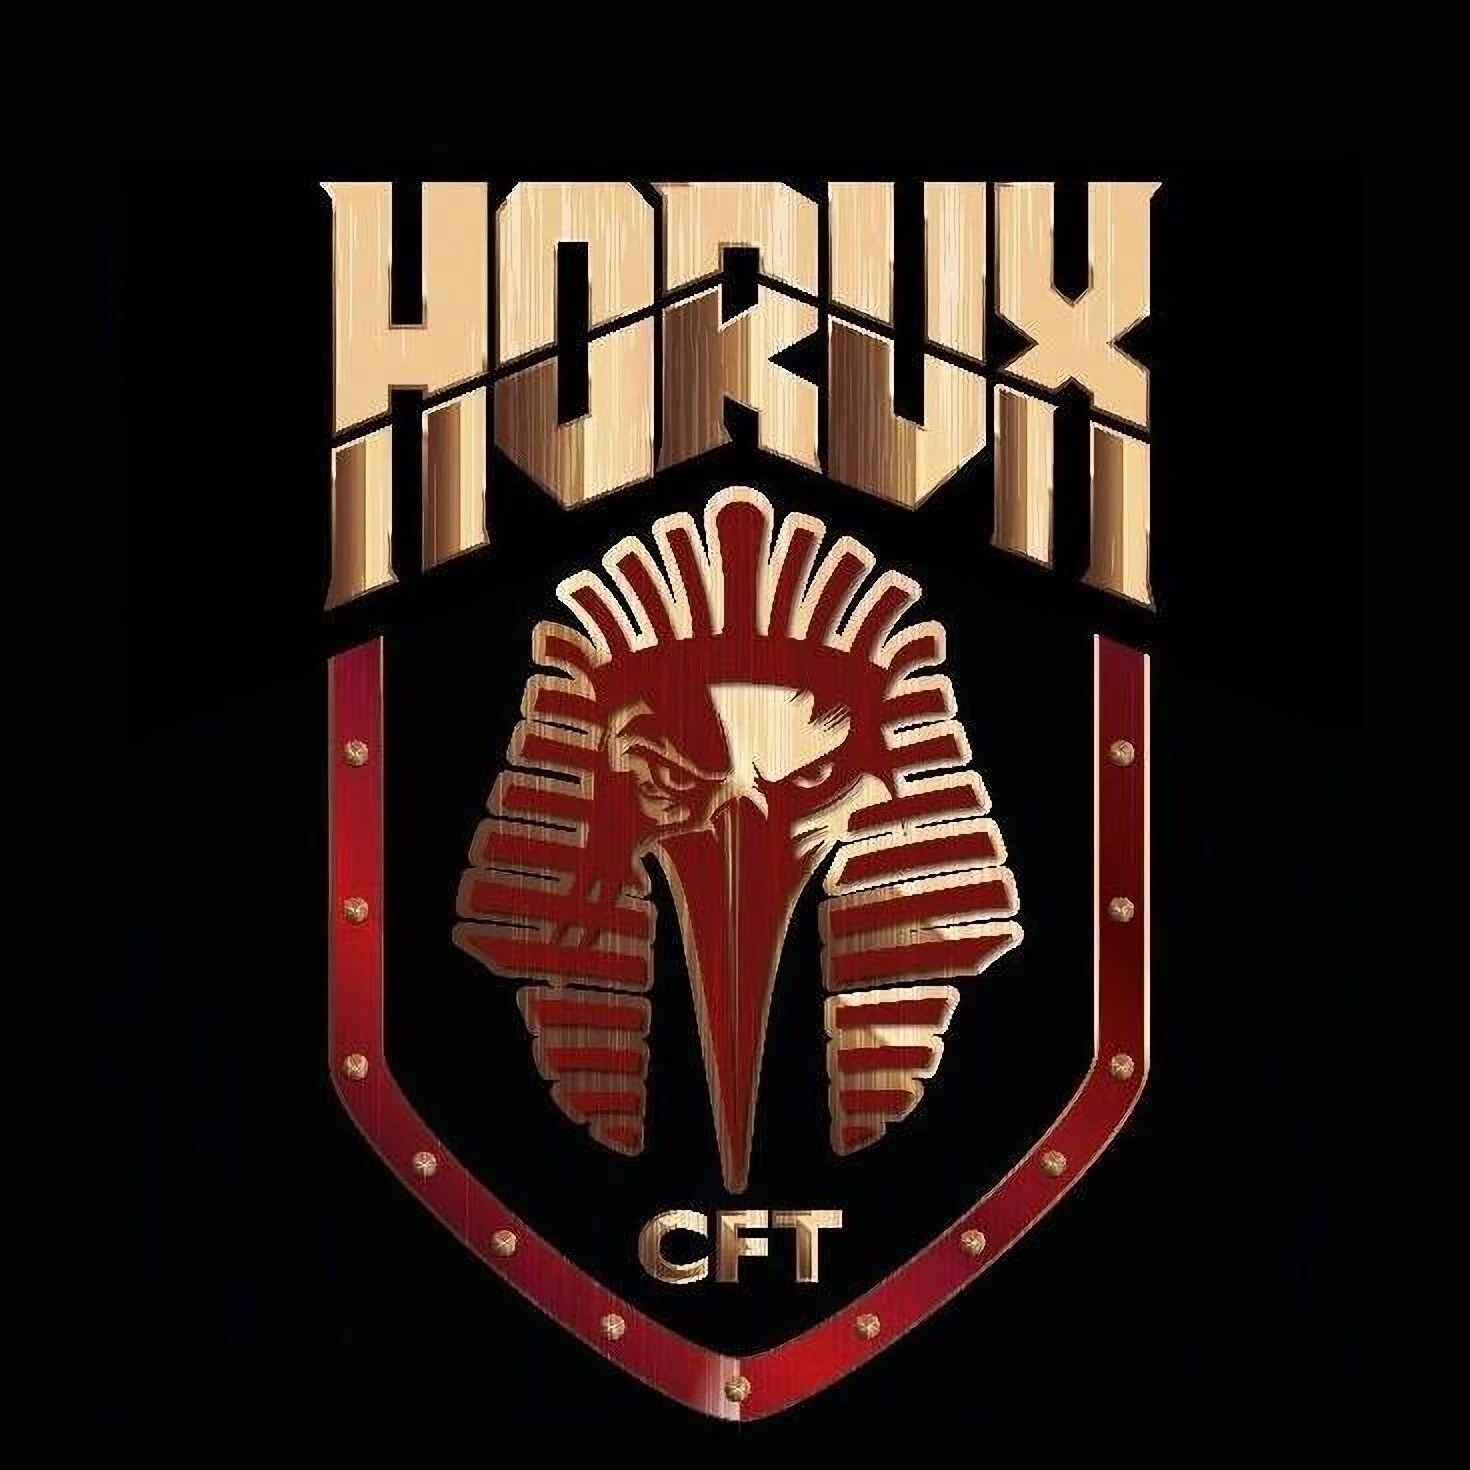 Crossfit-horux-cross-fitness-training-7109